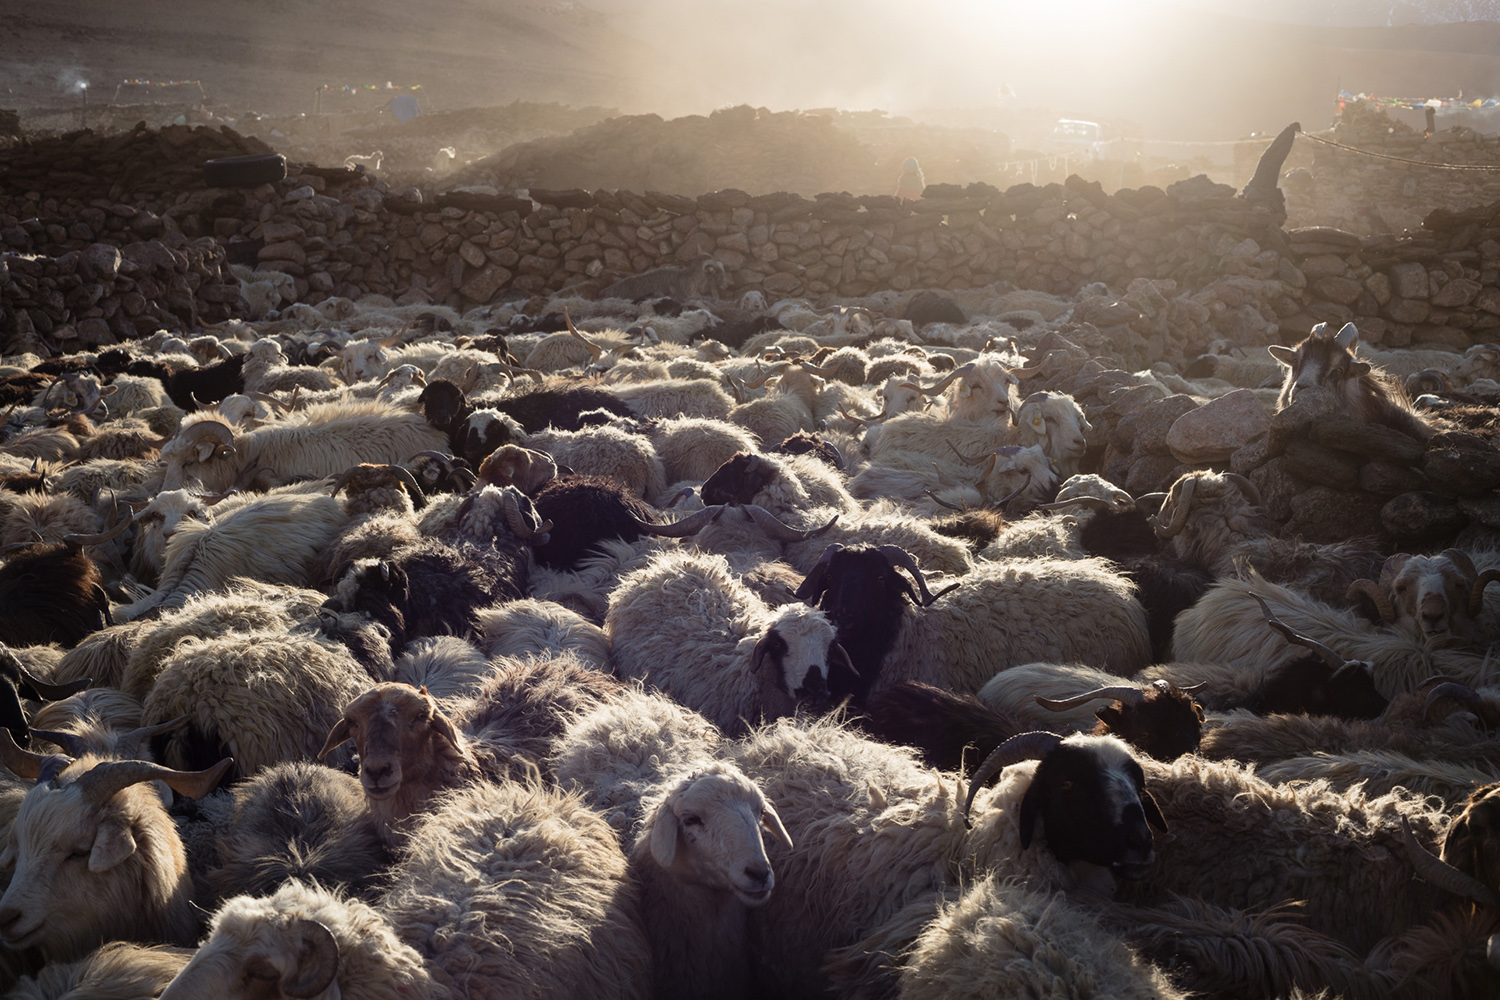 chèvres pashmina dans le Chang Tang, pendant un voyage photo au ladakh, dans l'Himalaya